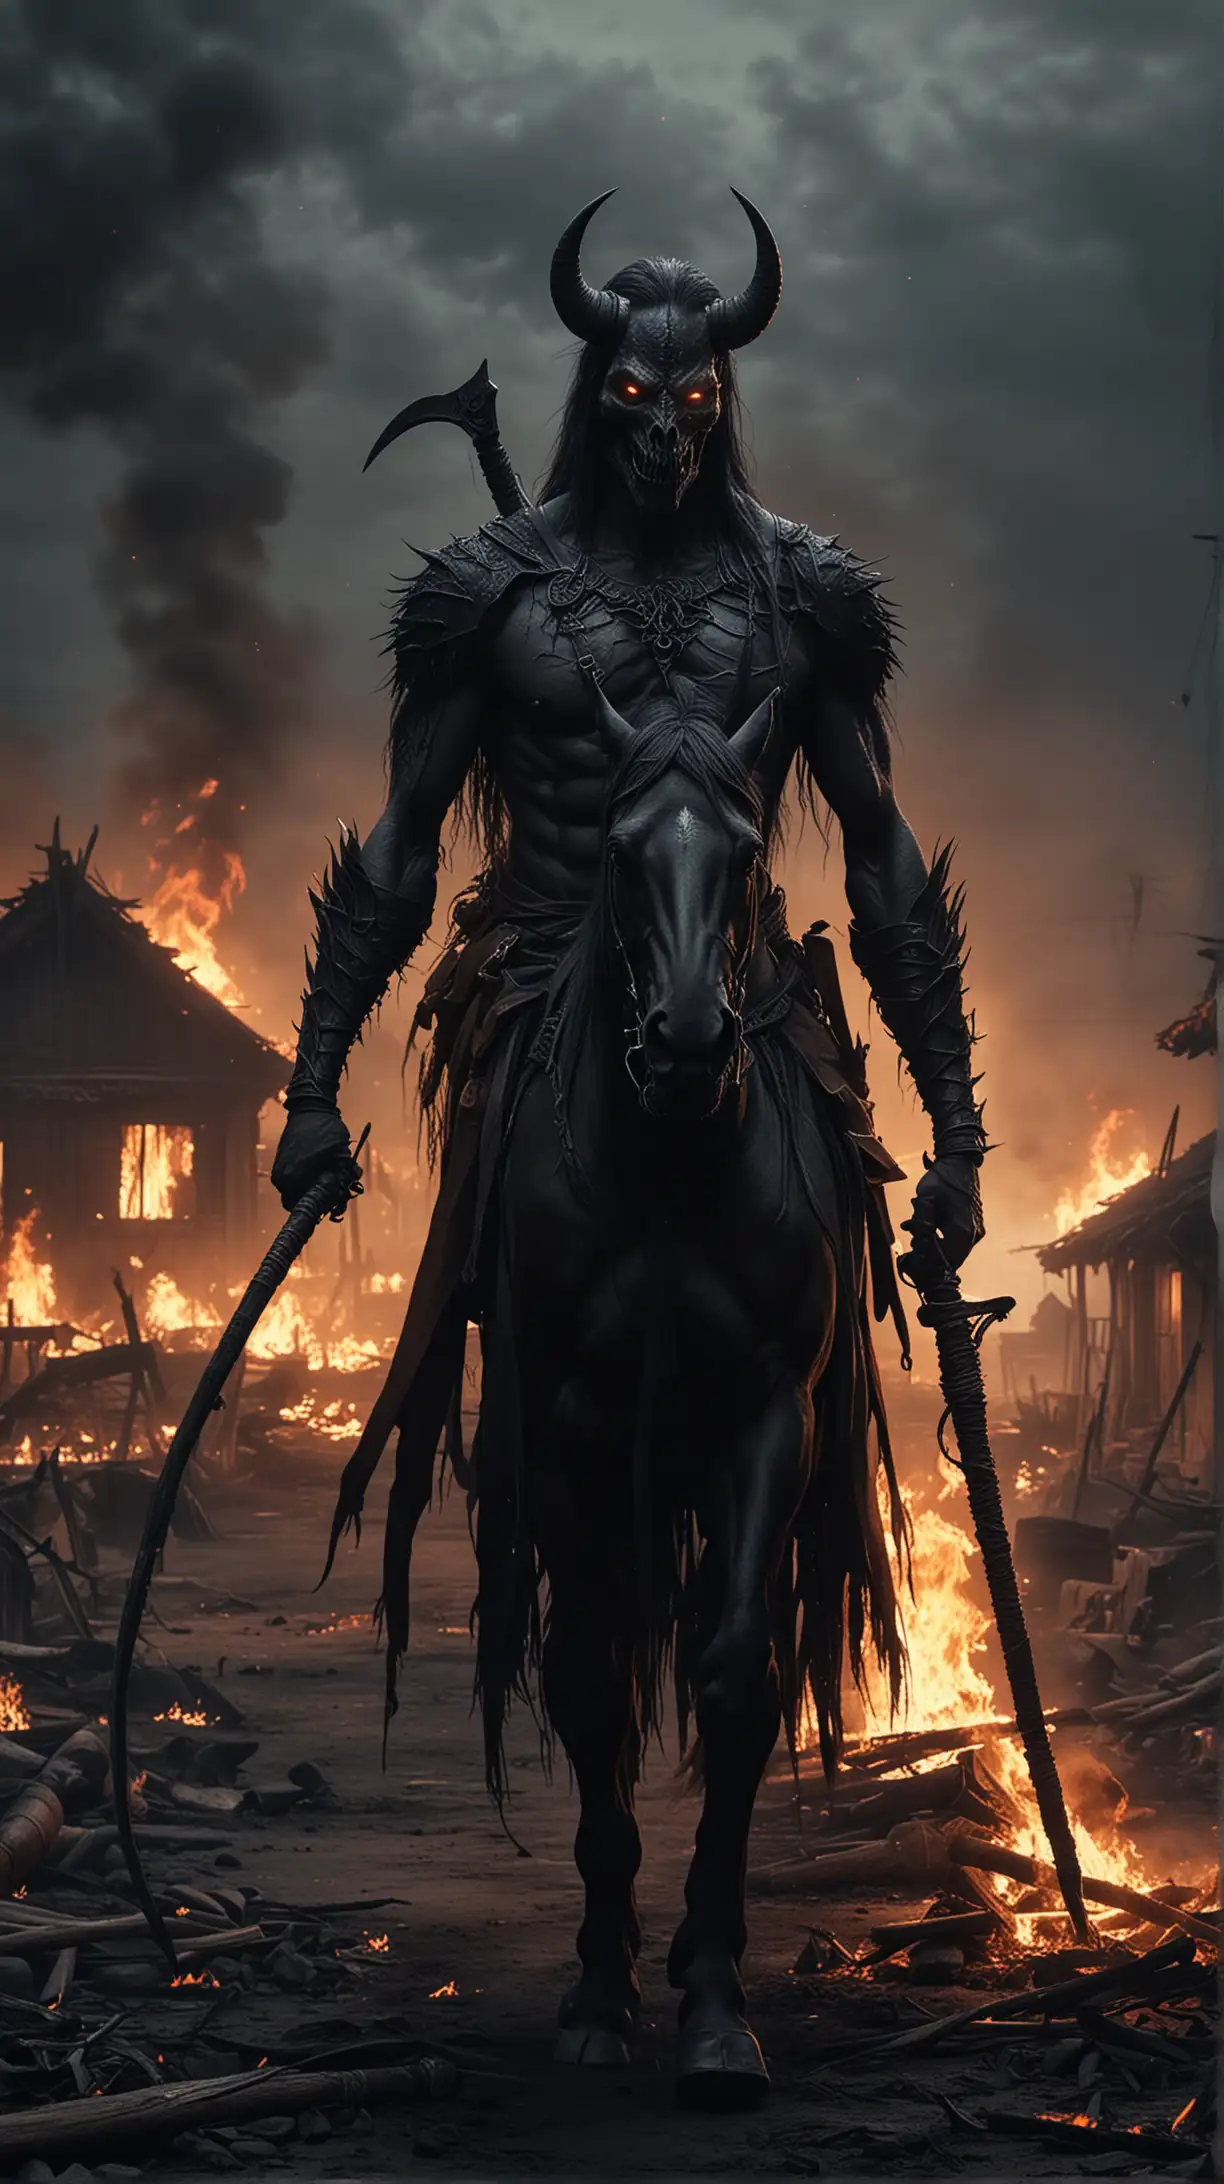 dark horror style, demon half-human and half-horse wearing black savan and holding long scythe, burning village on background, night, hyper-realistic, photo-realistic